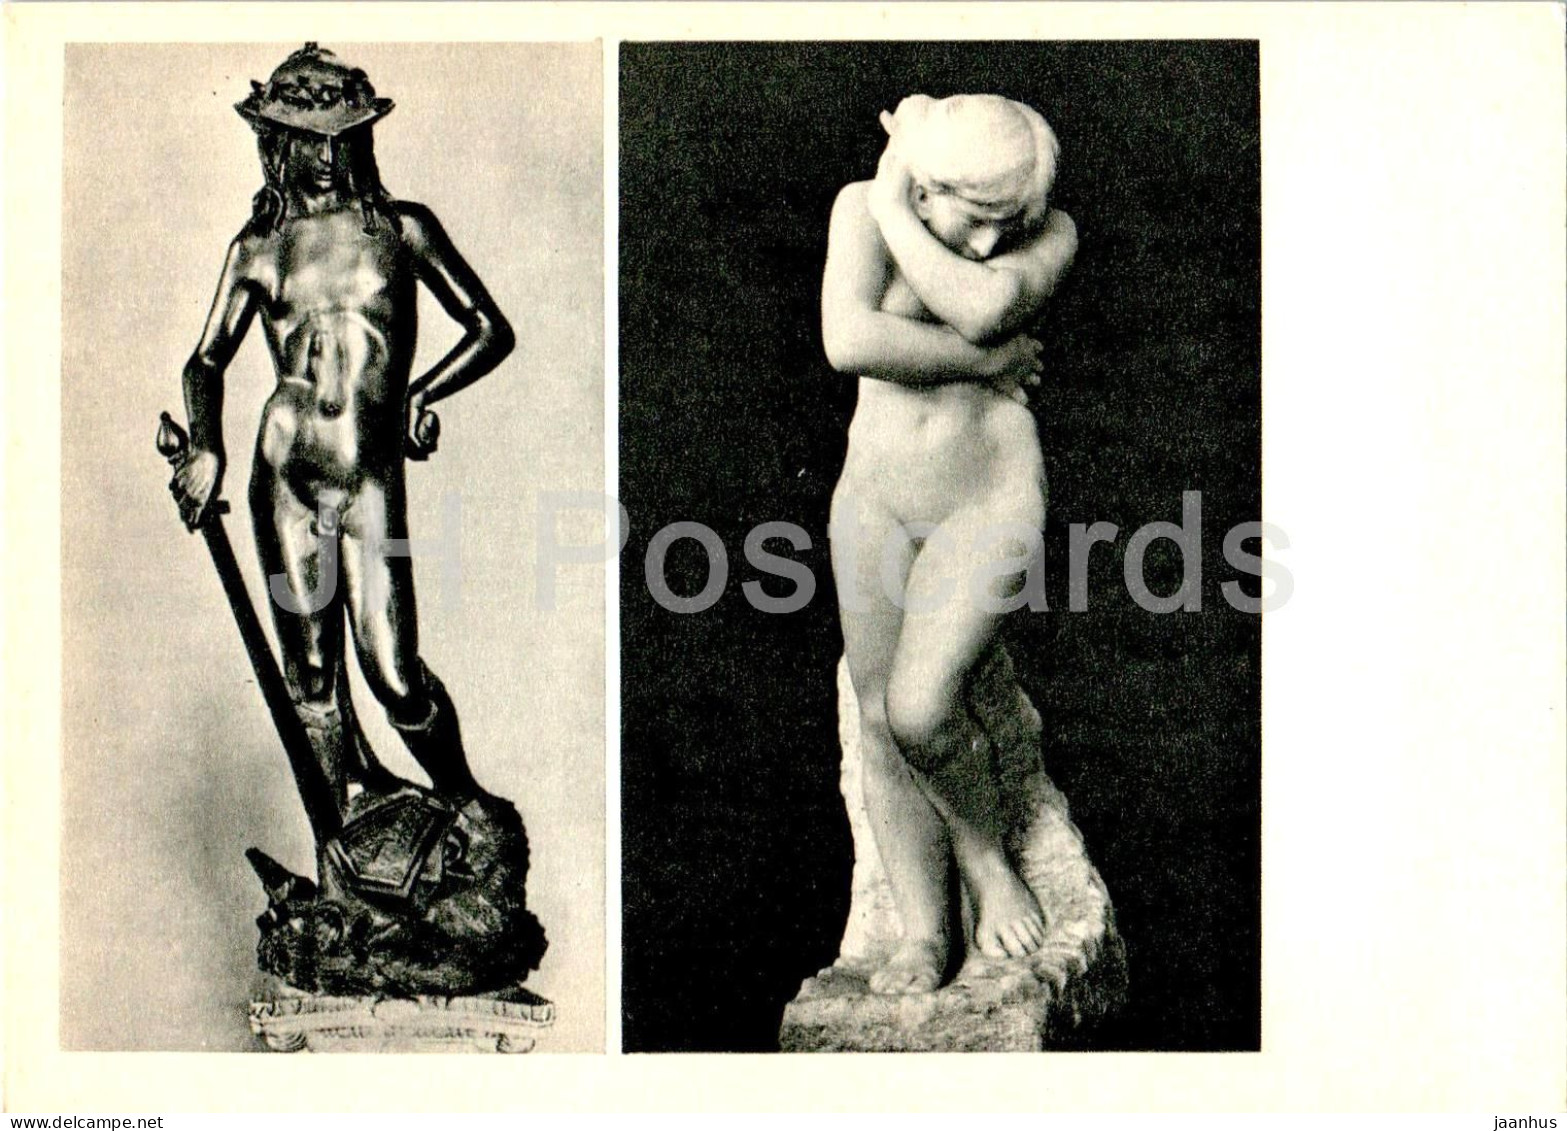 Sculpture By Donatello - David - Auguste Rodin - Eva - Italian , French Art - 1967 - Russia USSR - Unused - Sculpturen